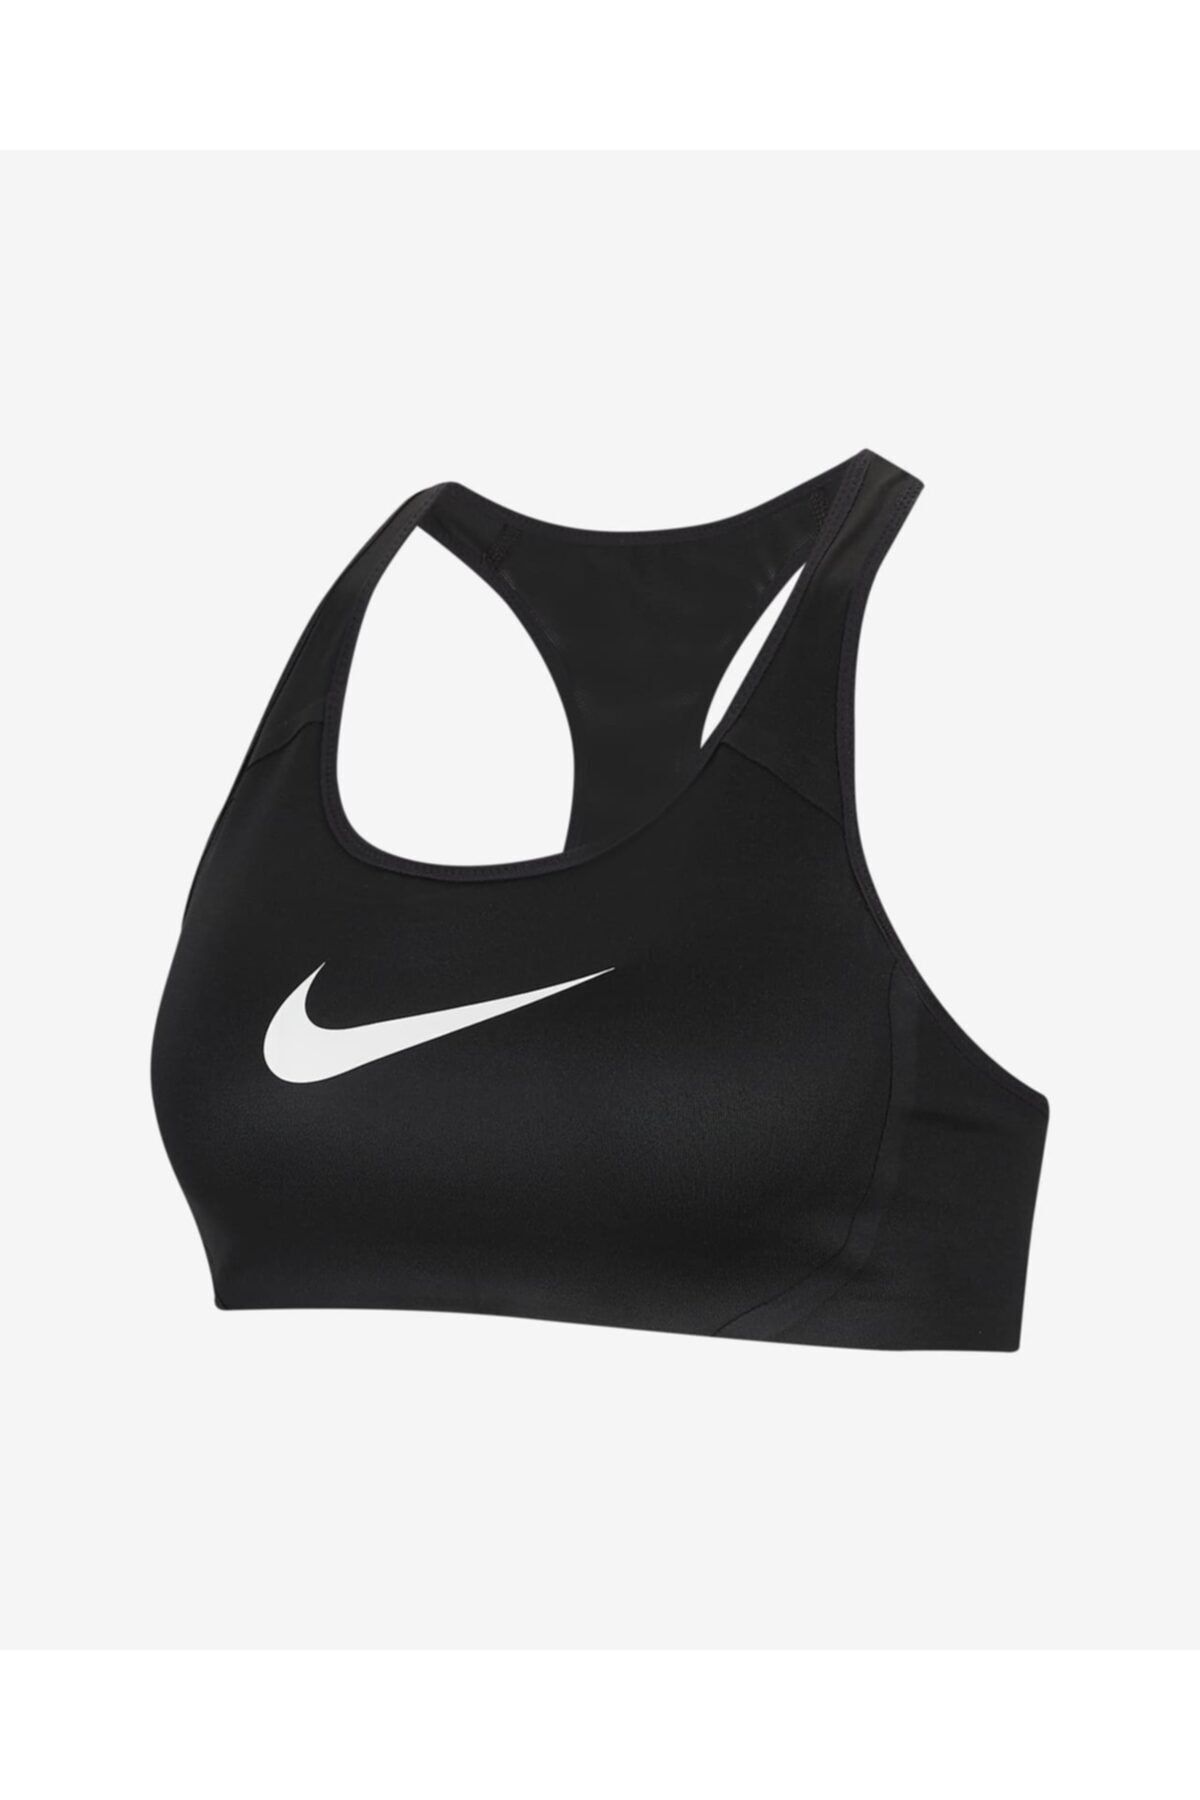 Nike Women's Victory Shape Sports Bra Grey Black AJ5219-091 (XS) :  : Clothing, Shoes & Accessories